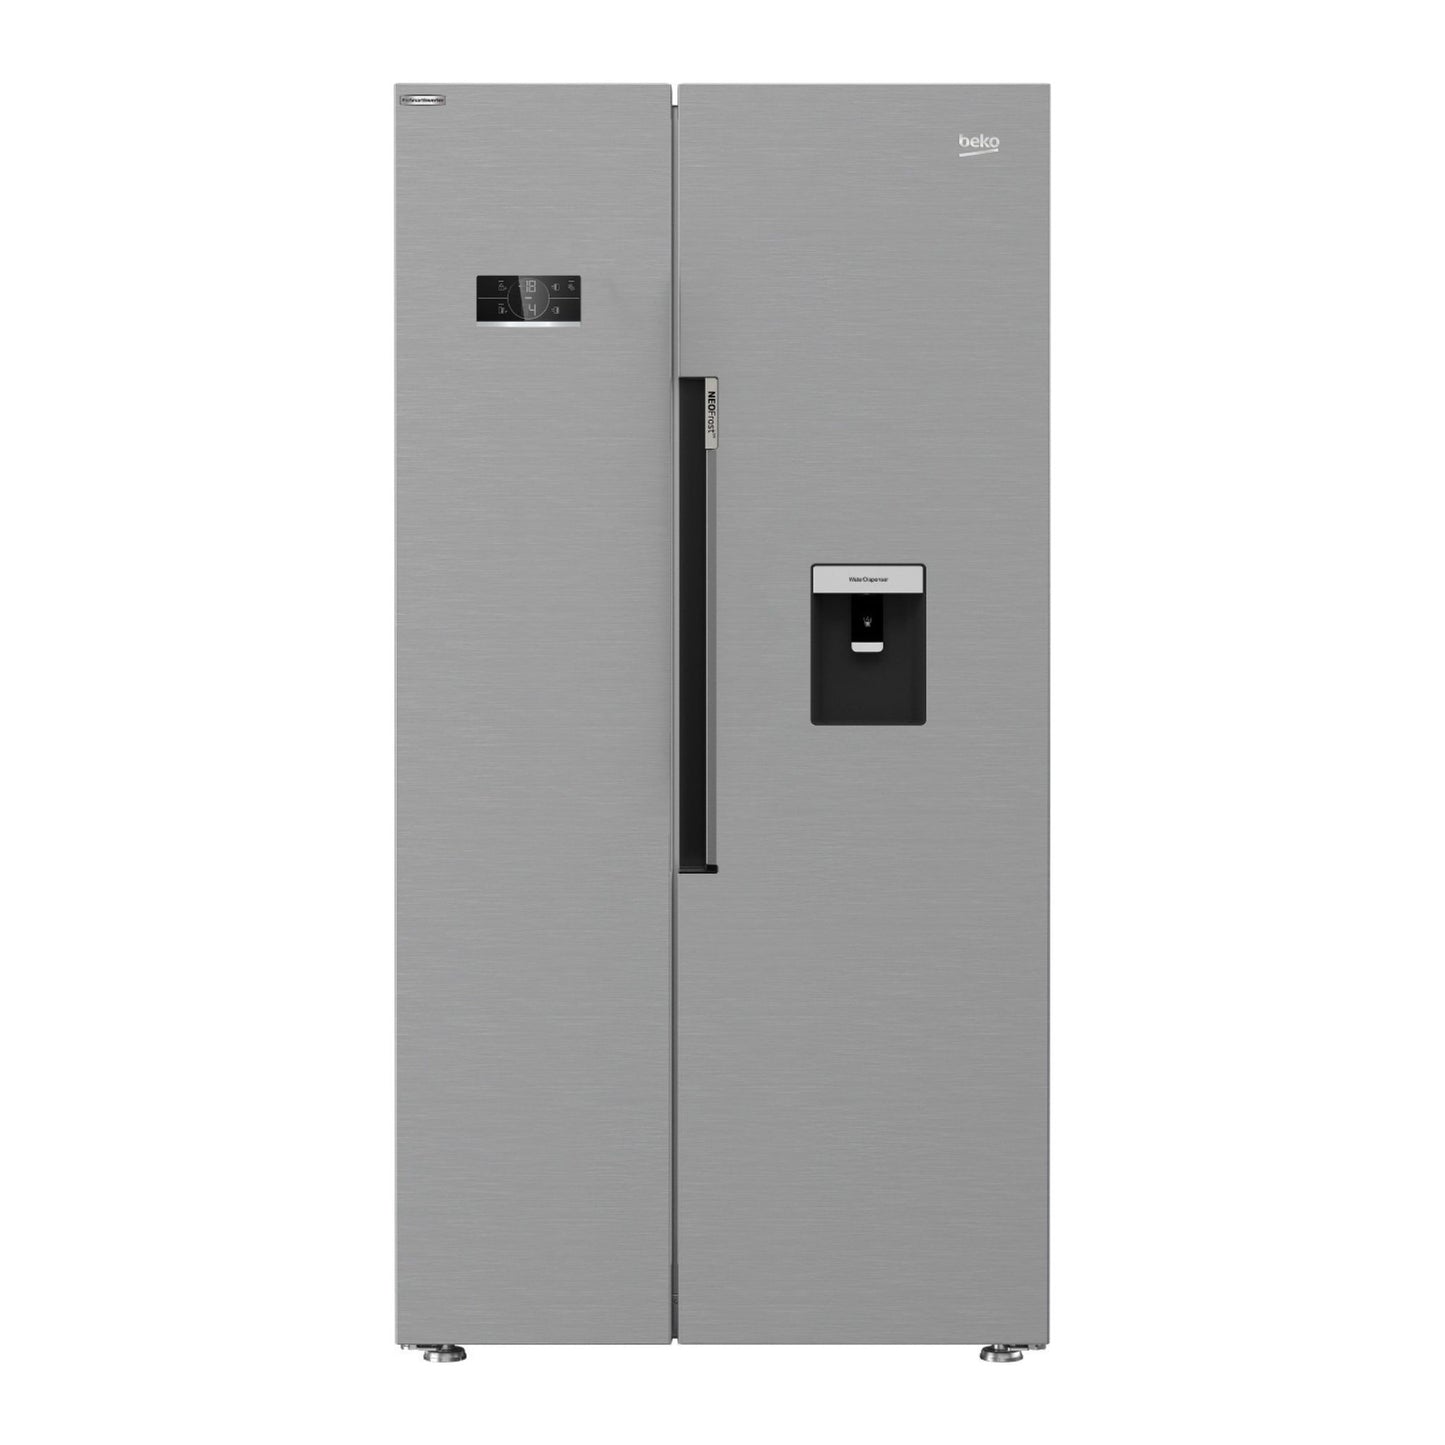 Beko 676L Side by Side Refrigerator, G91635NE